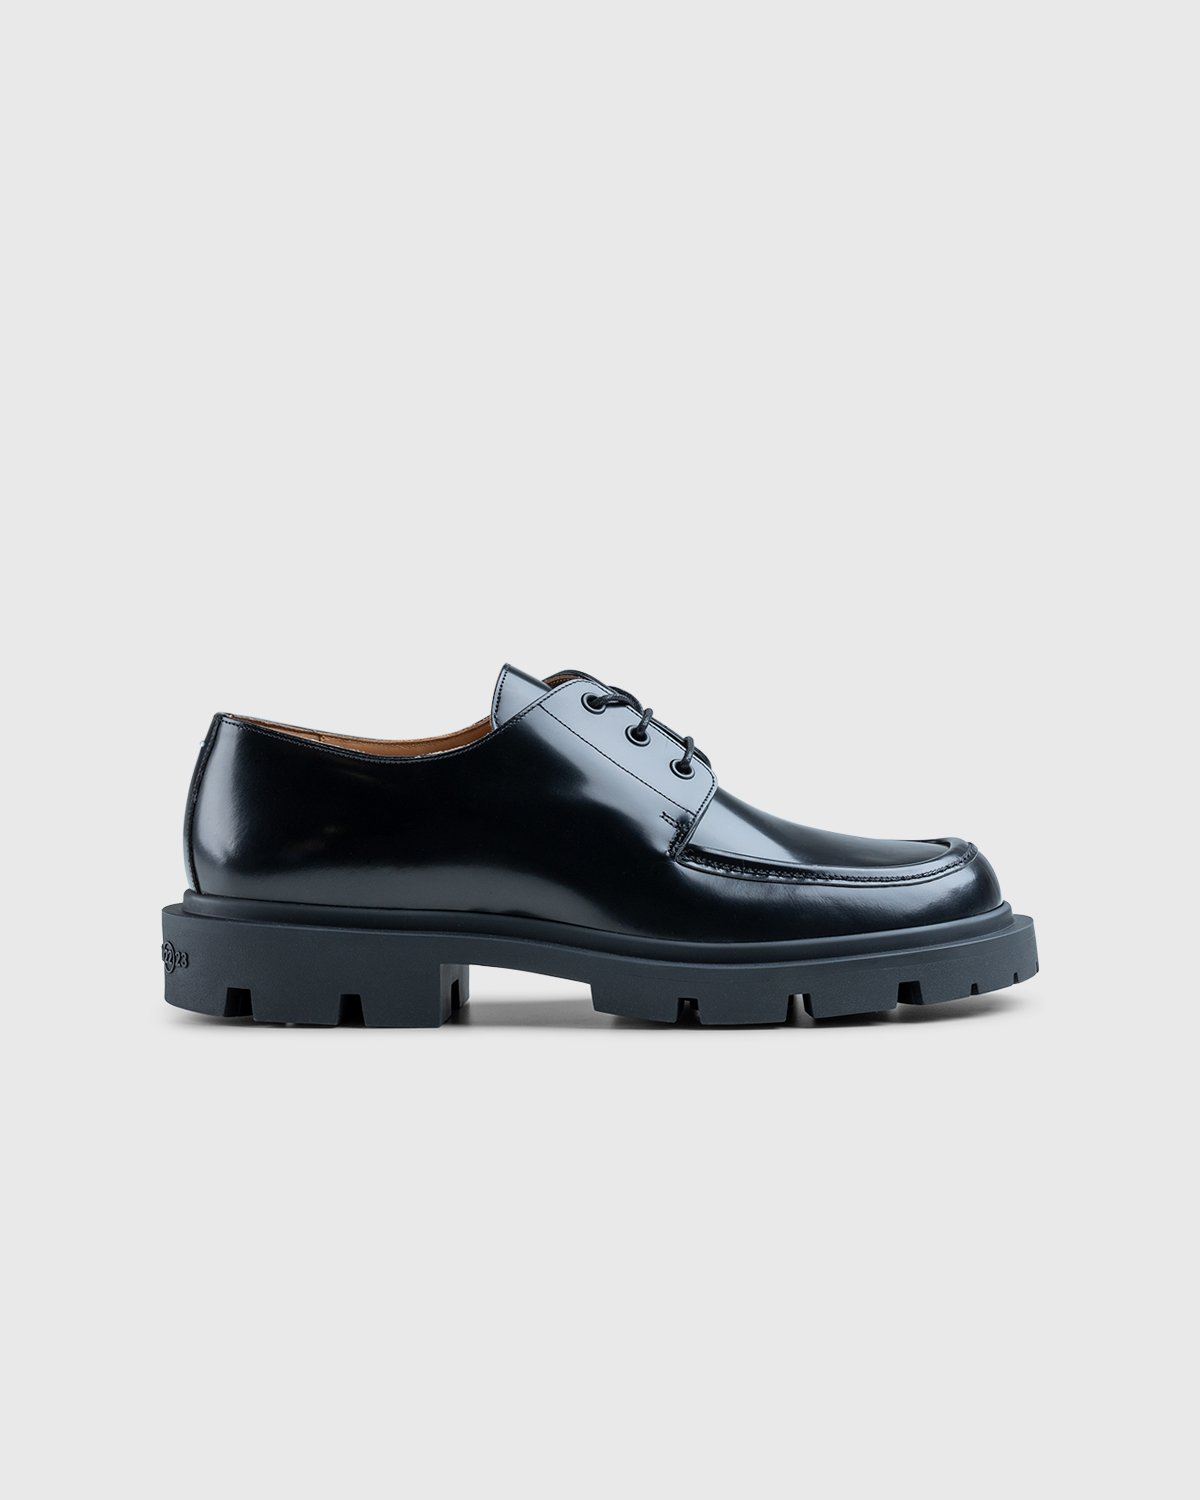 Maison Margiela - Cleated Sole Shoes Black - Footwear - Black - Image 1